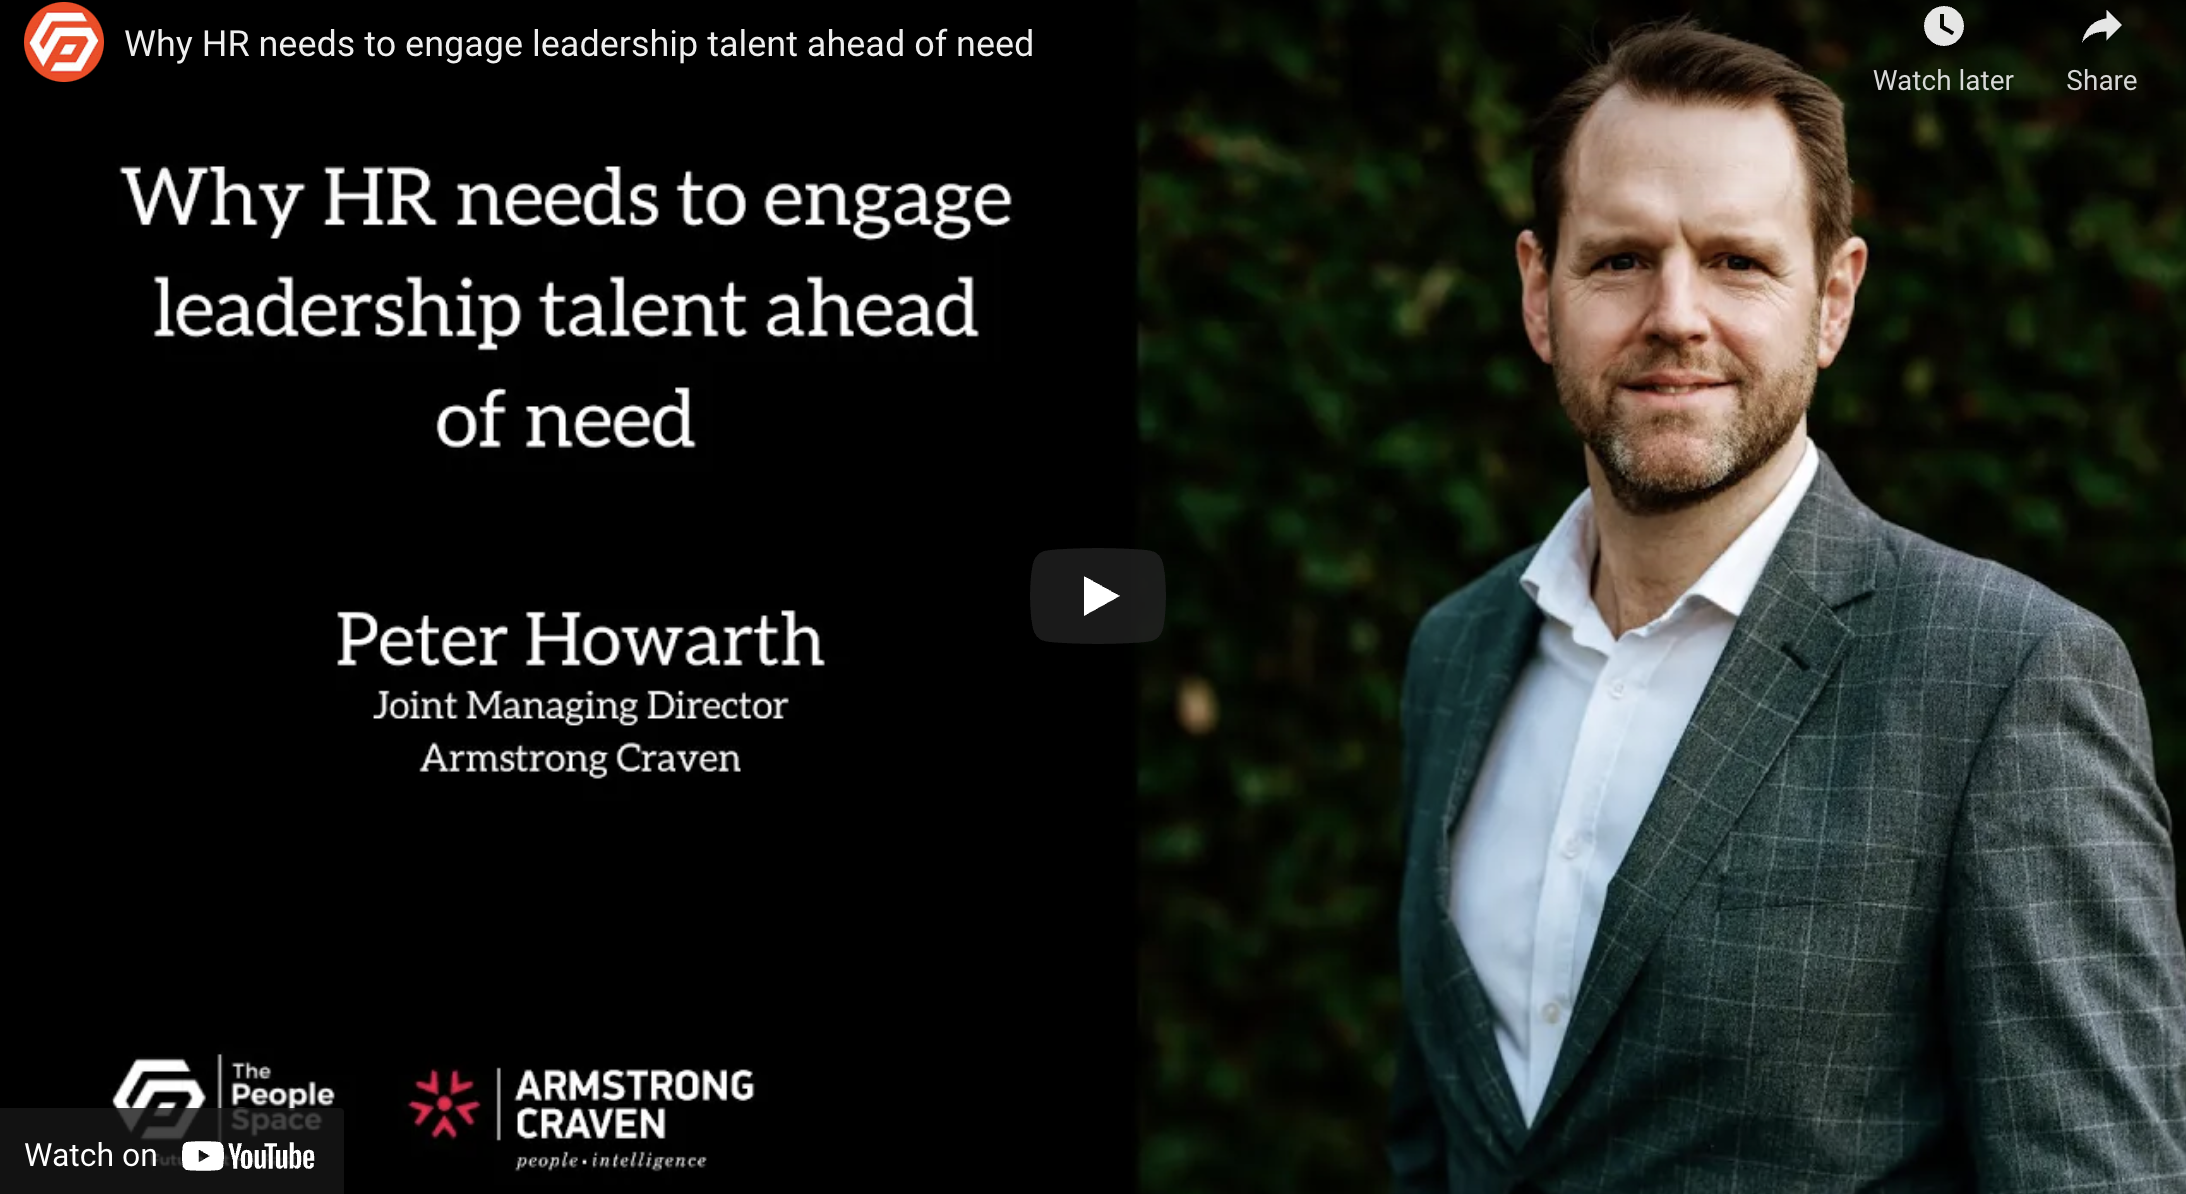 Engaging talent ahead of need is vital to leadership succession